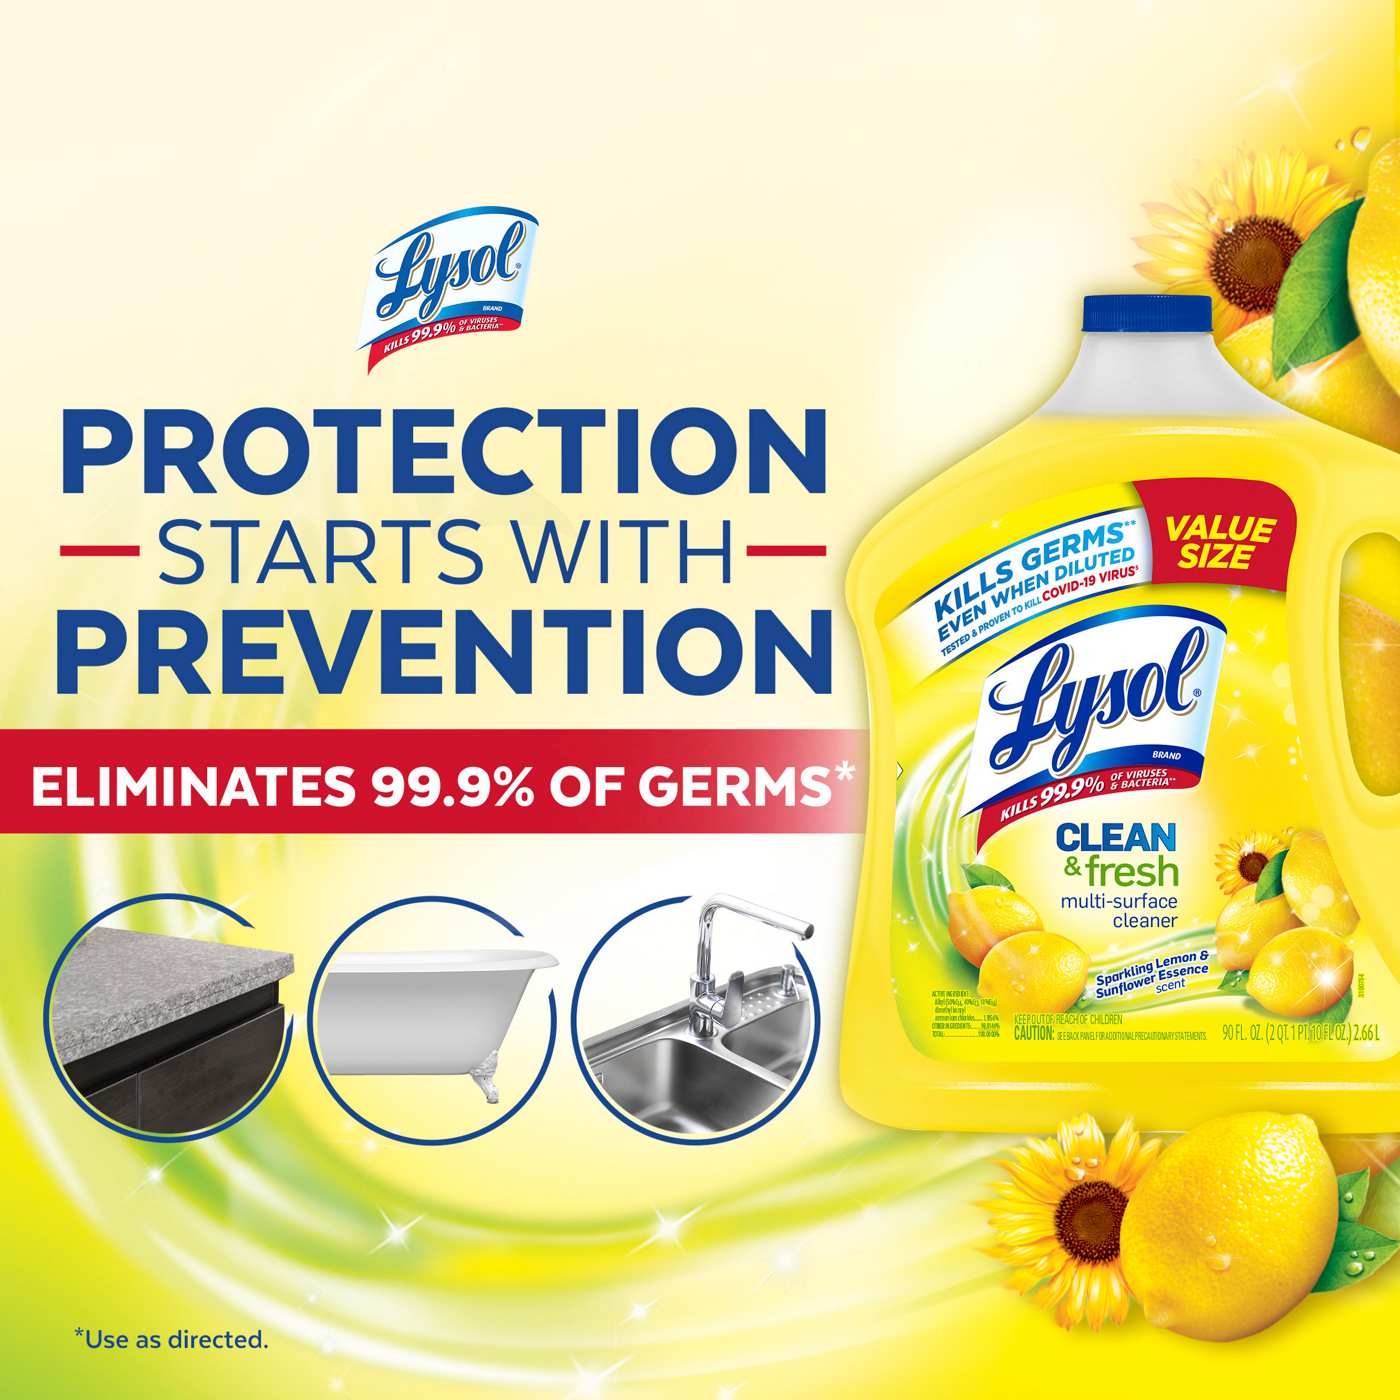 Lysol Sparkling Lemon & Sunflower Multi-Surface Cleaner Value Size; image 3 of 6